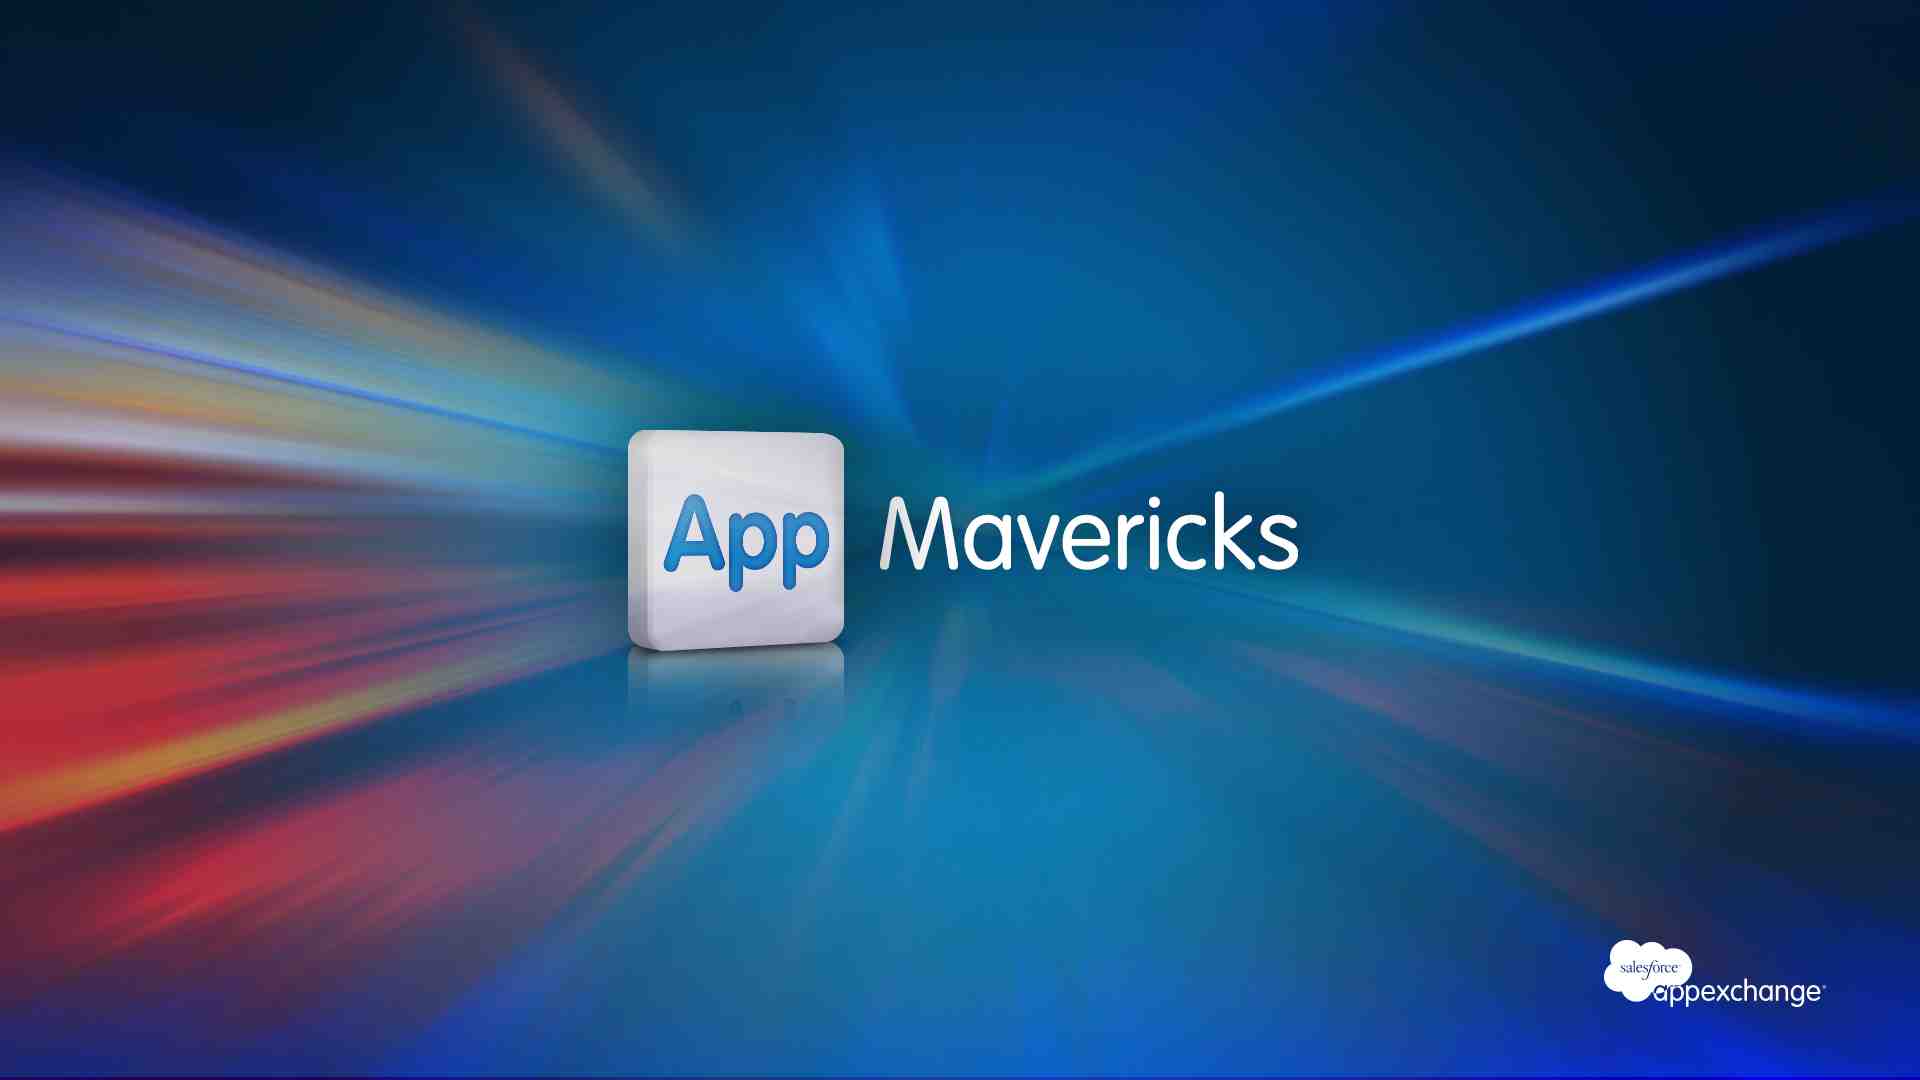 App Mavericks, Ep. 2: Silverline's "WaterCooler" App Makes Employee Collaboration Easy